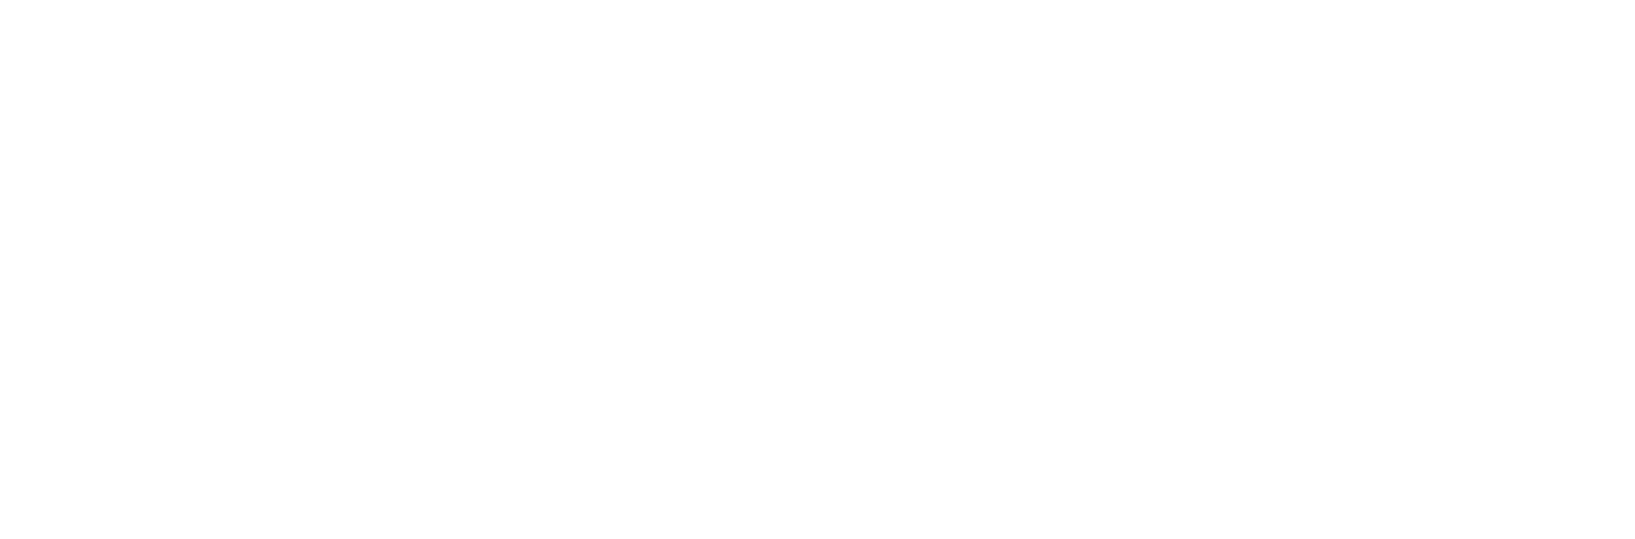 Yourhome Makelaars Amsterdam - Real Estate Agent Amsterdam